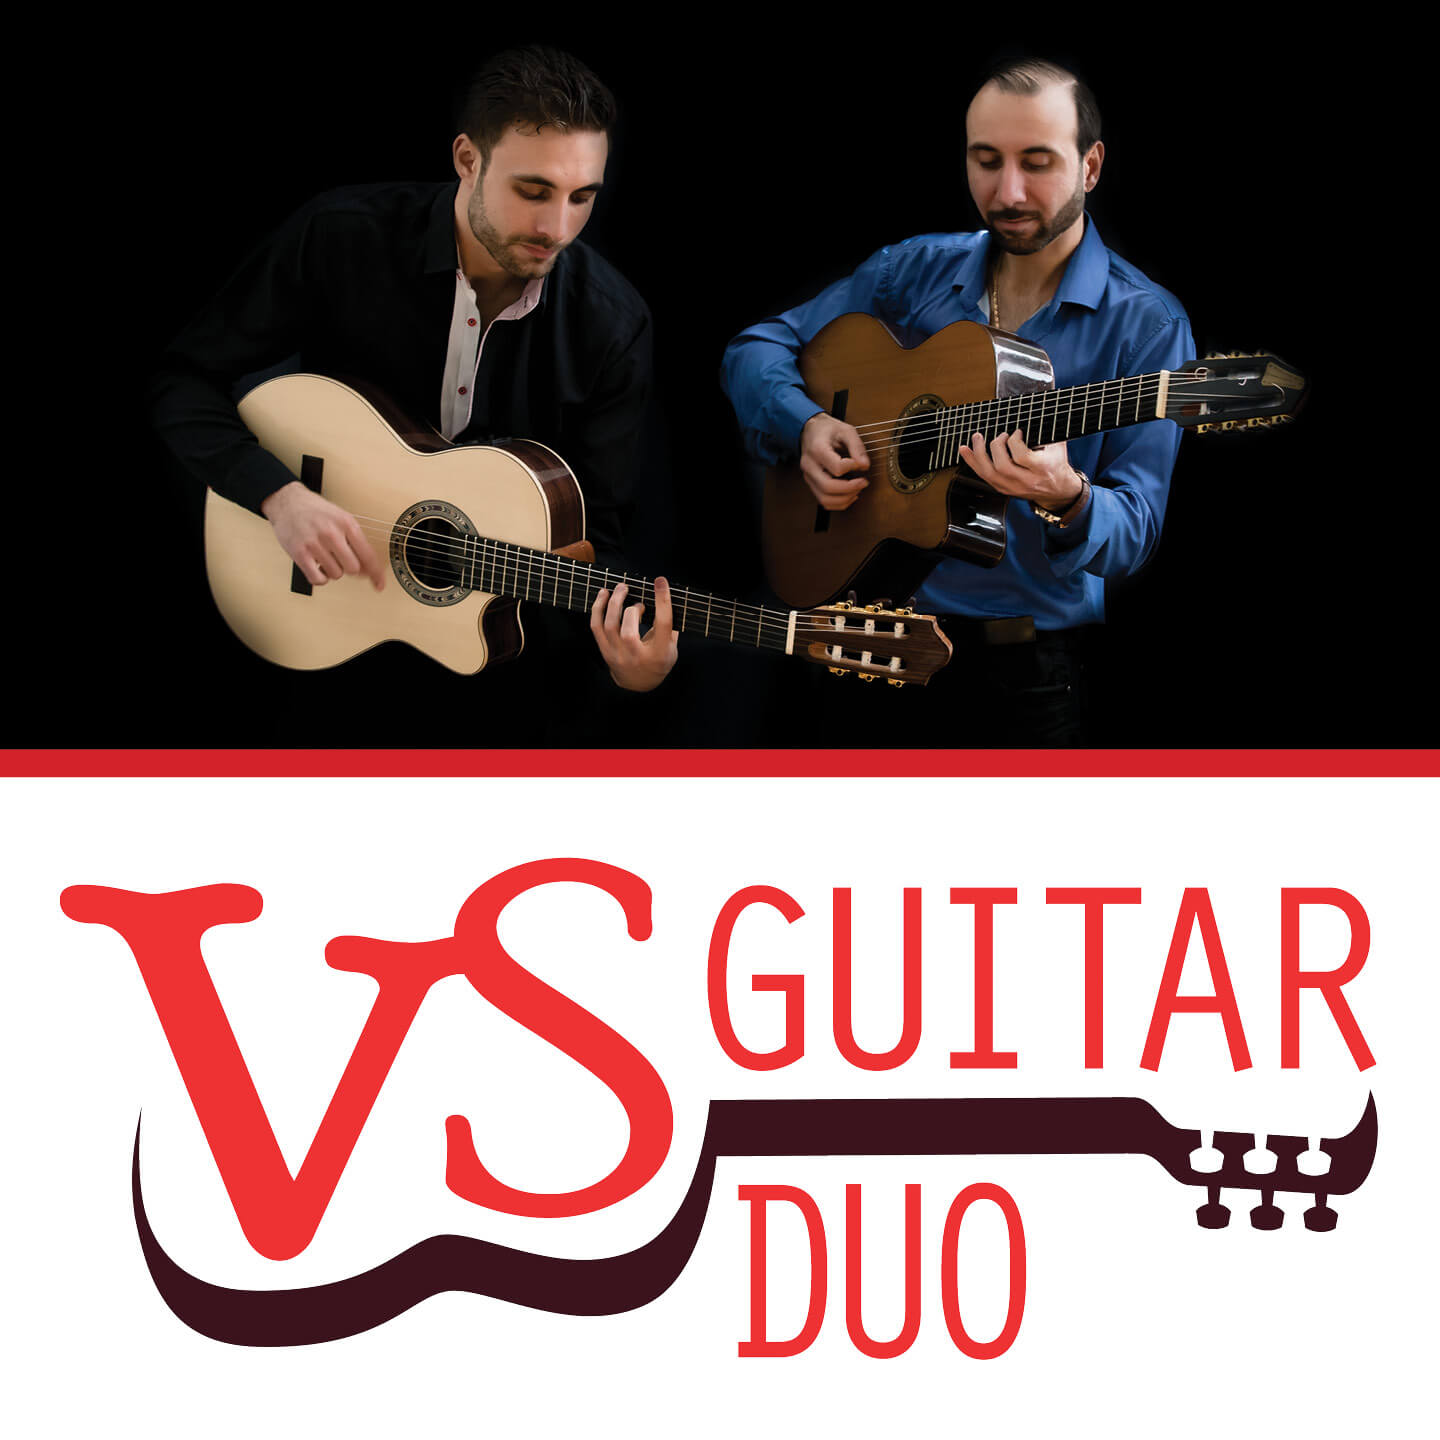 VS Guitar Duo & Friends